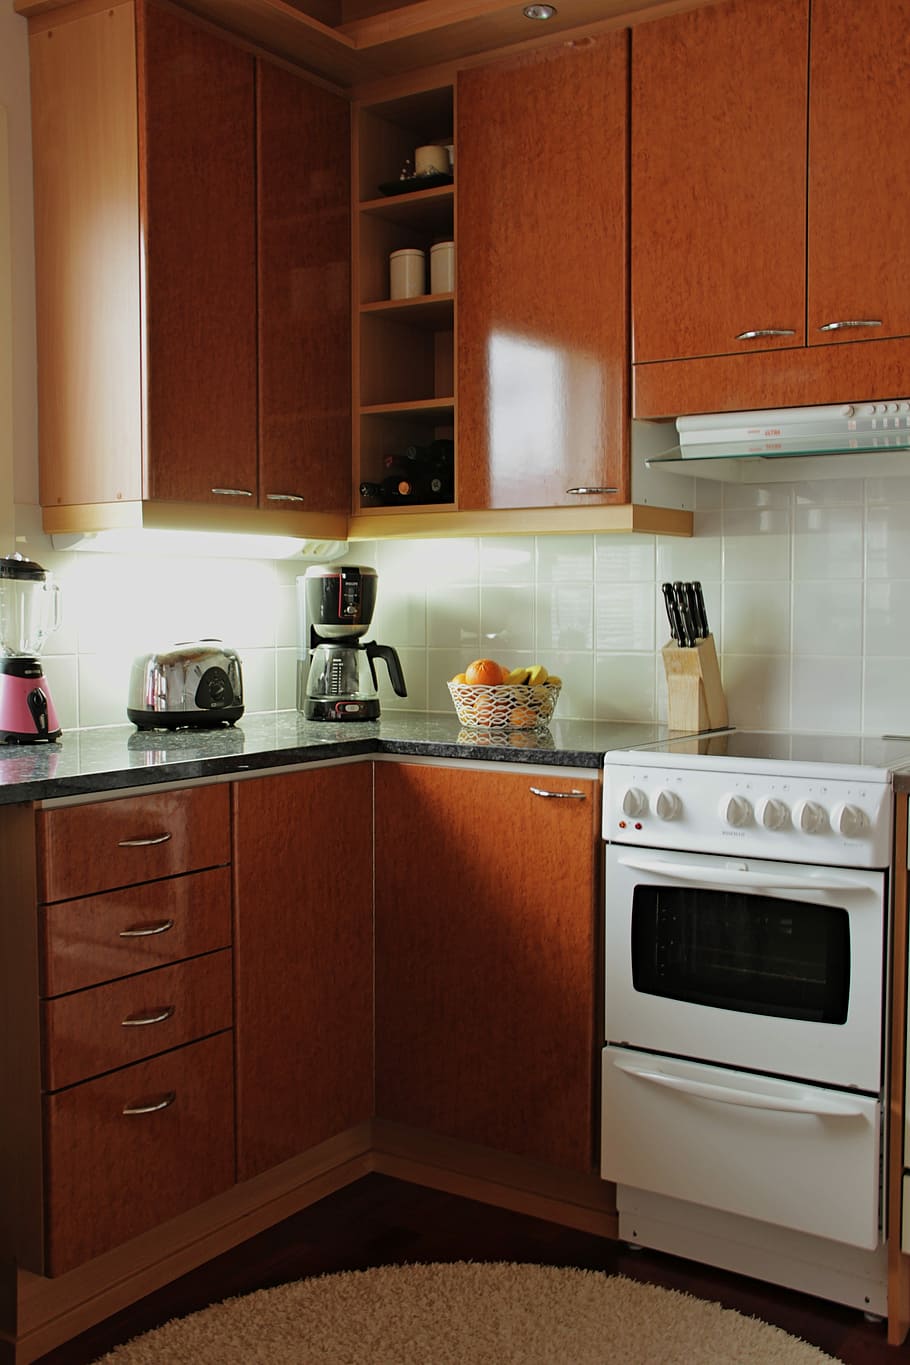 Kitchen, Cooking Utensil, Stove, Corner, domestic room, domestic kitchen, kitchen counter, cabinet, oven, home